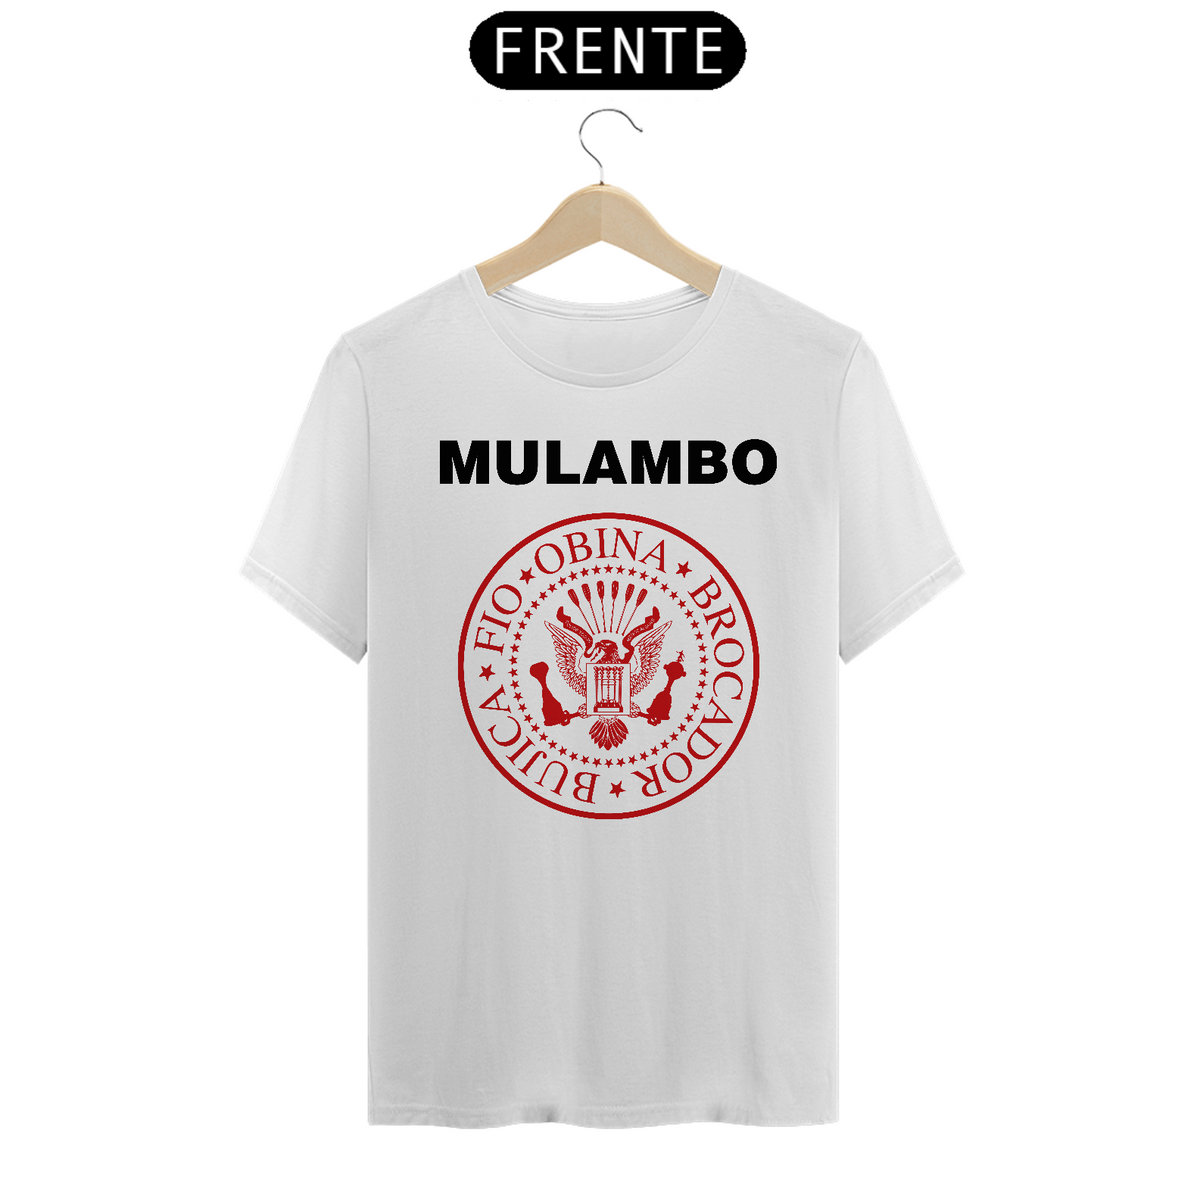 Nome do produto: Mulambo - T-shirt Quality - Branco/Cinza